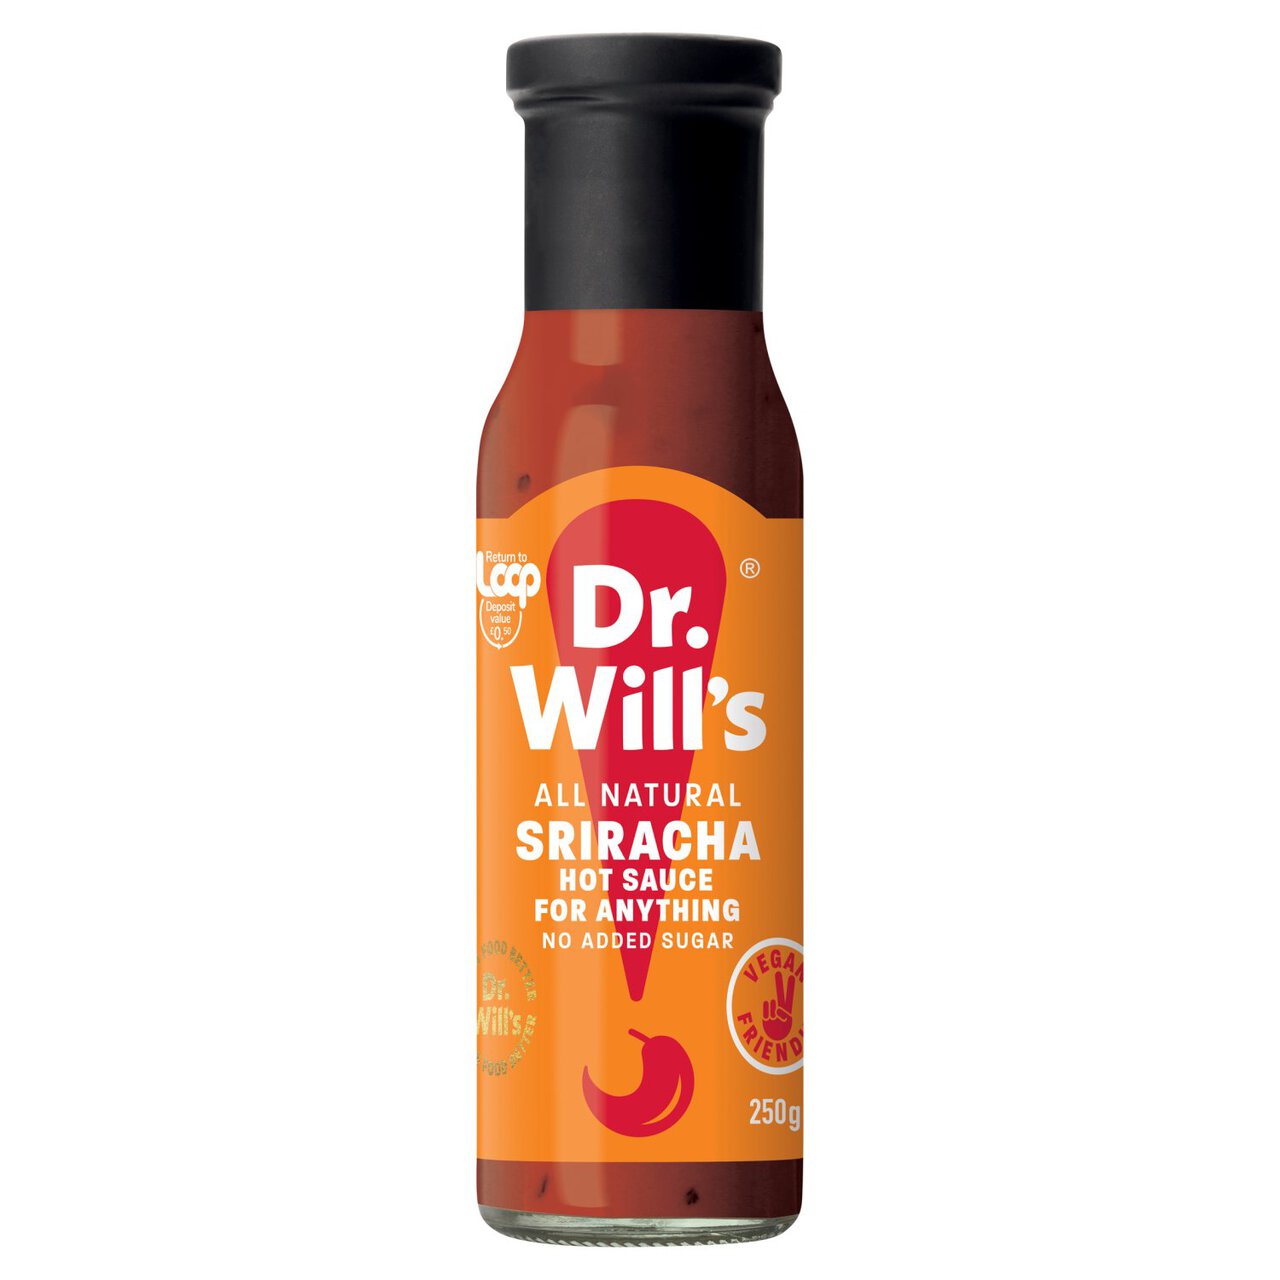 Dr Will's Sriracha Hot Sauce 250g